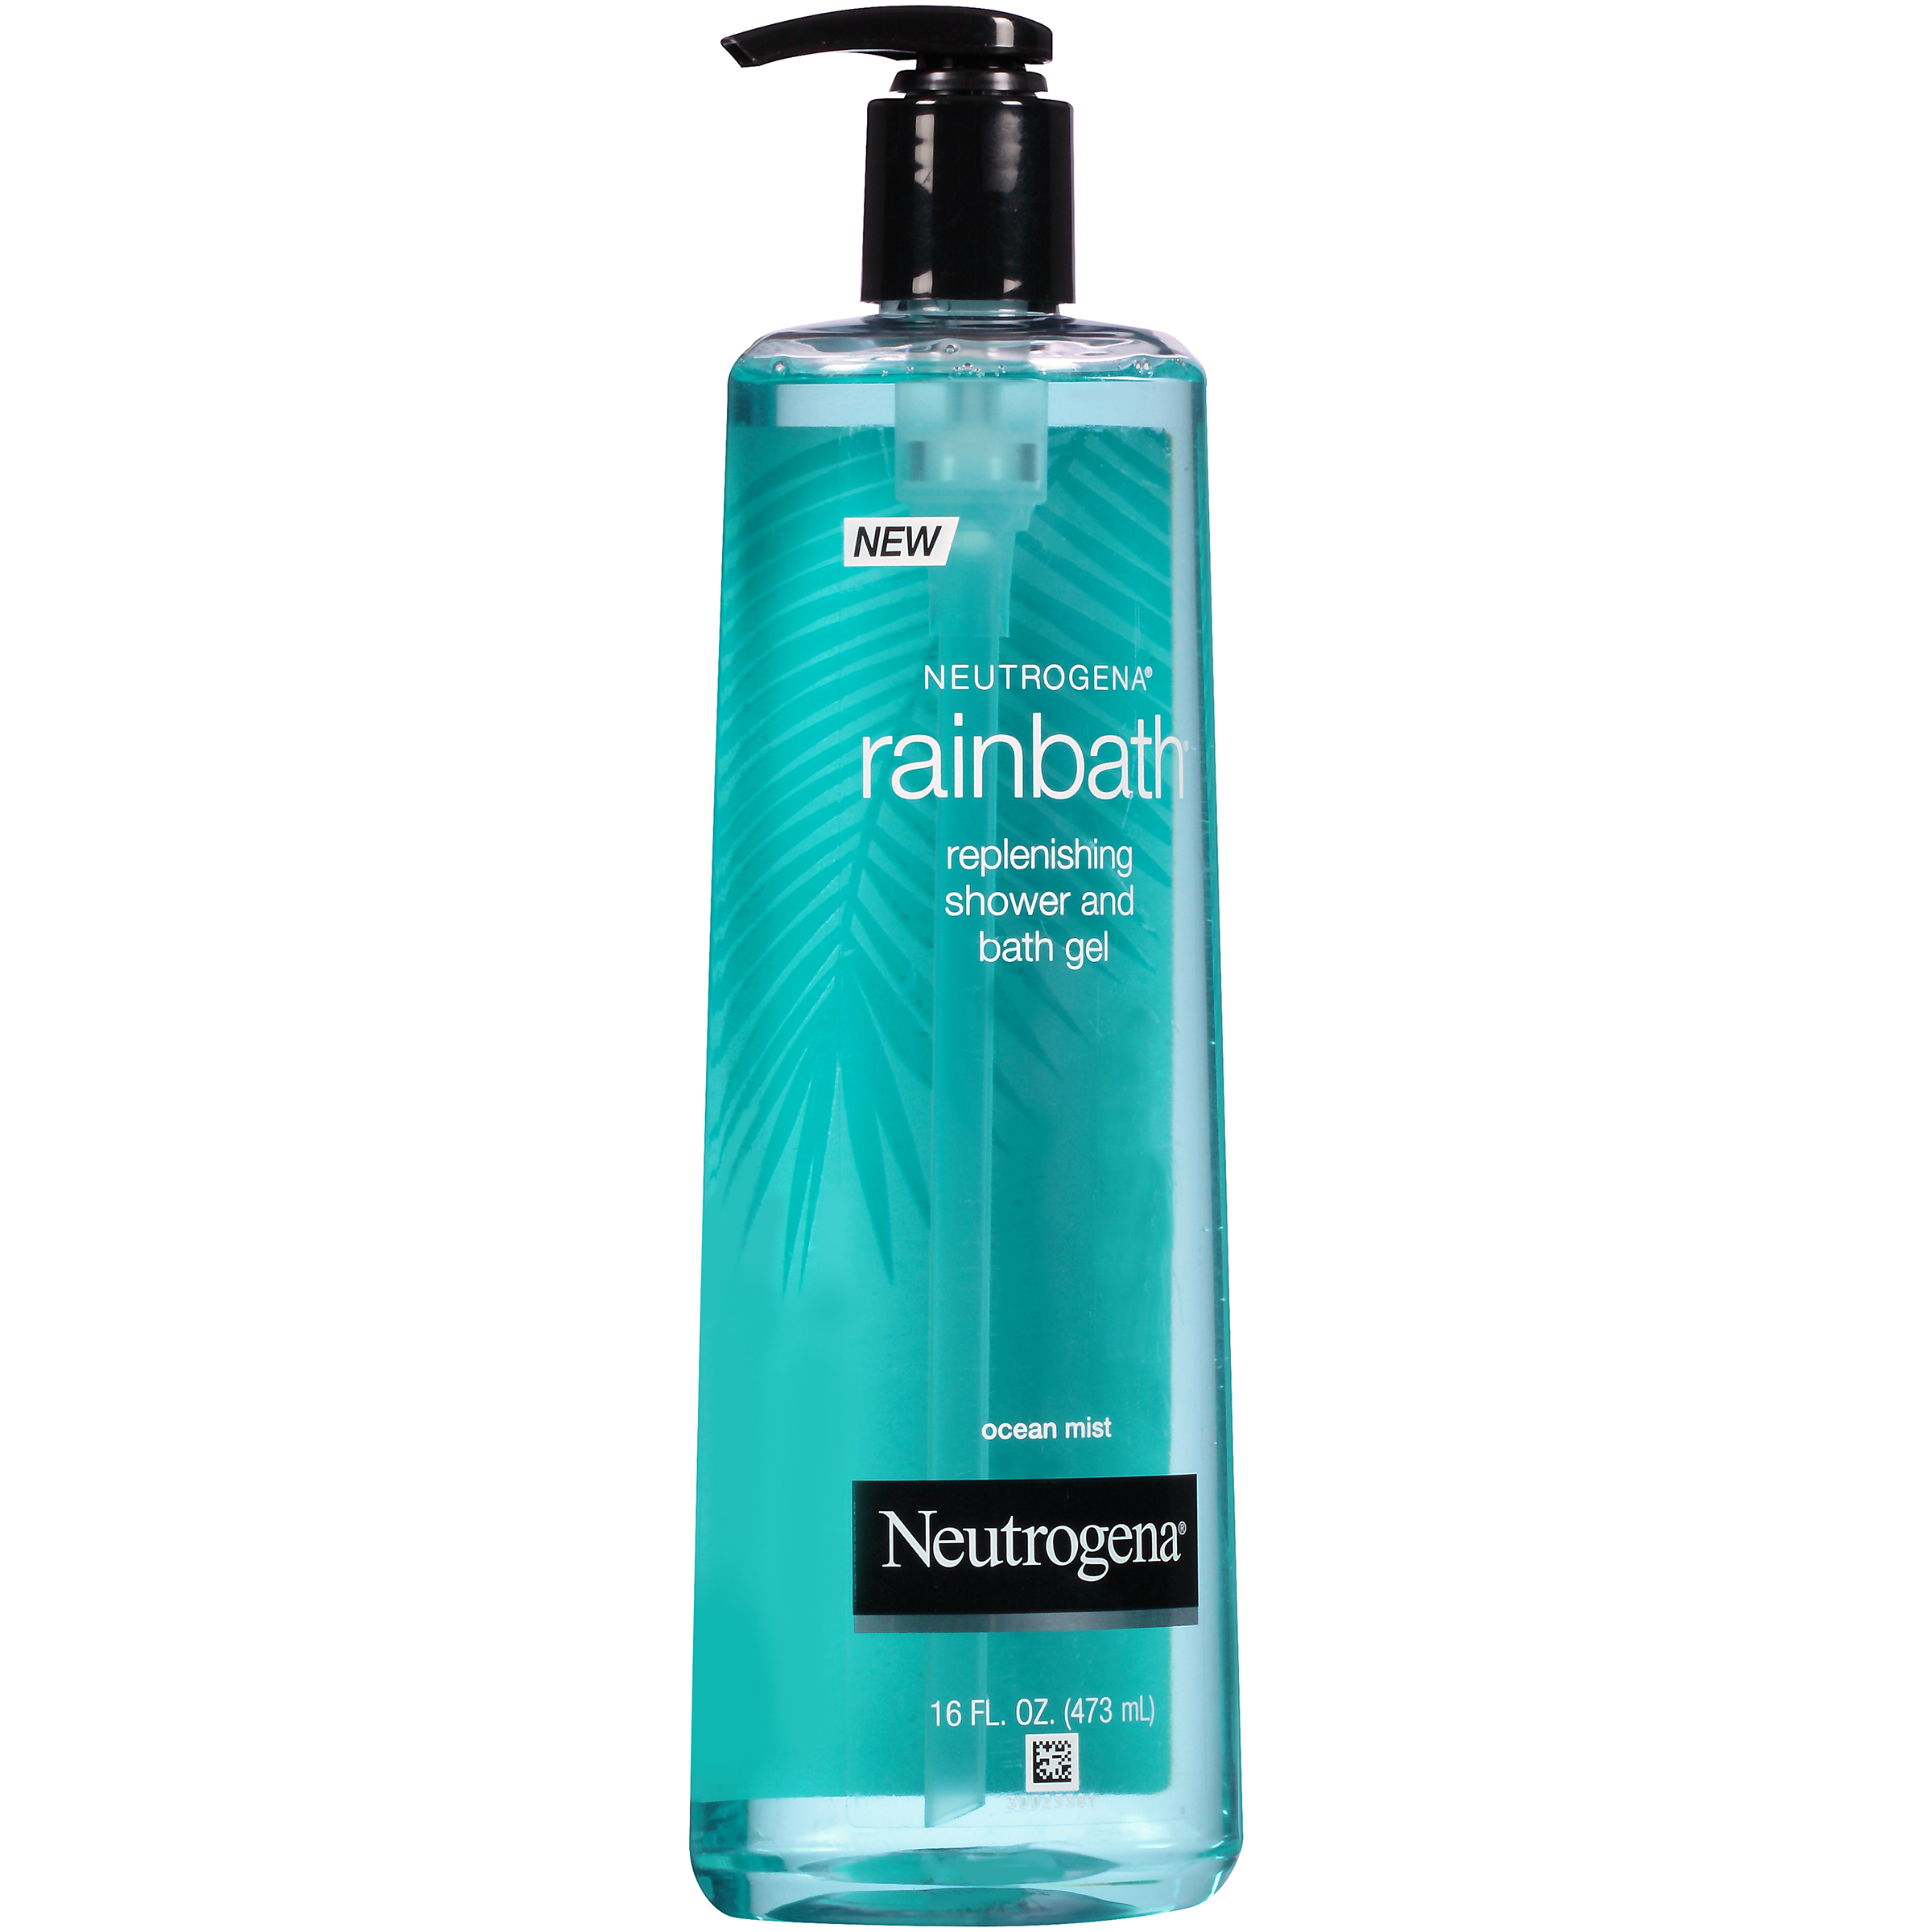 Neutrogena Rainbath Replenishing Shower and Bath Gel, Ocean Mist, 16 Fl. Oz.